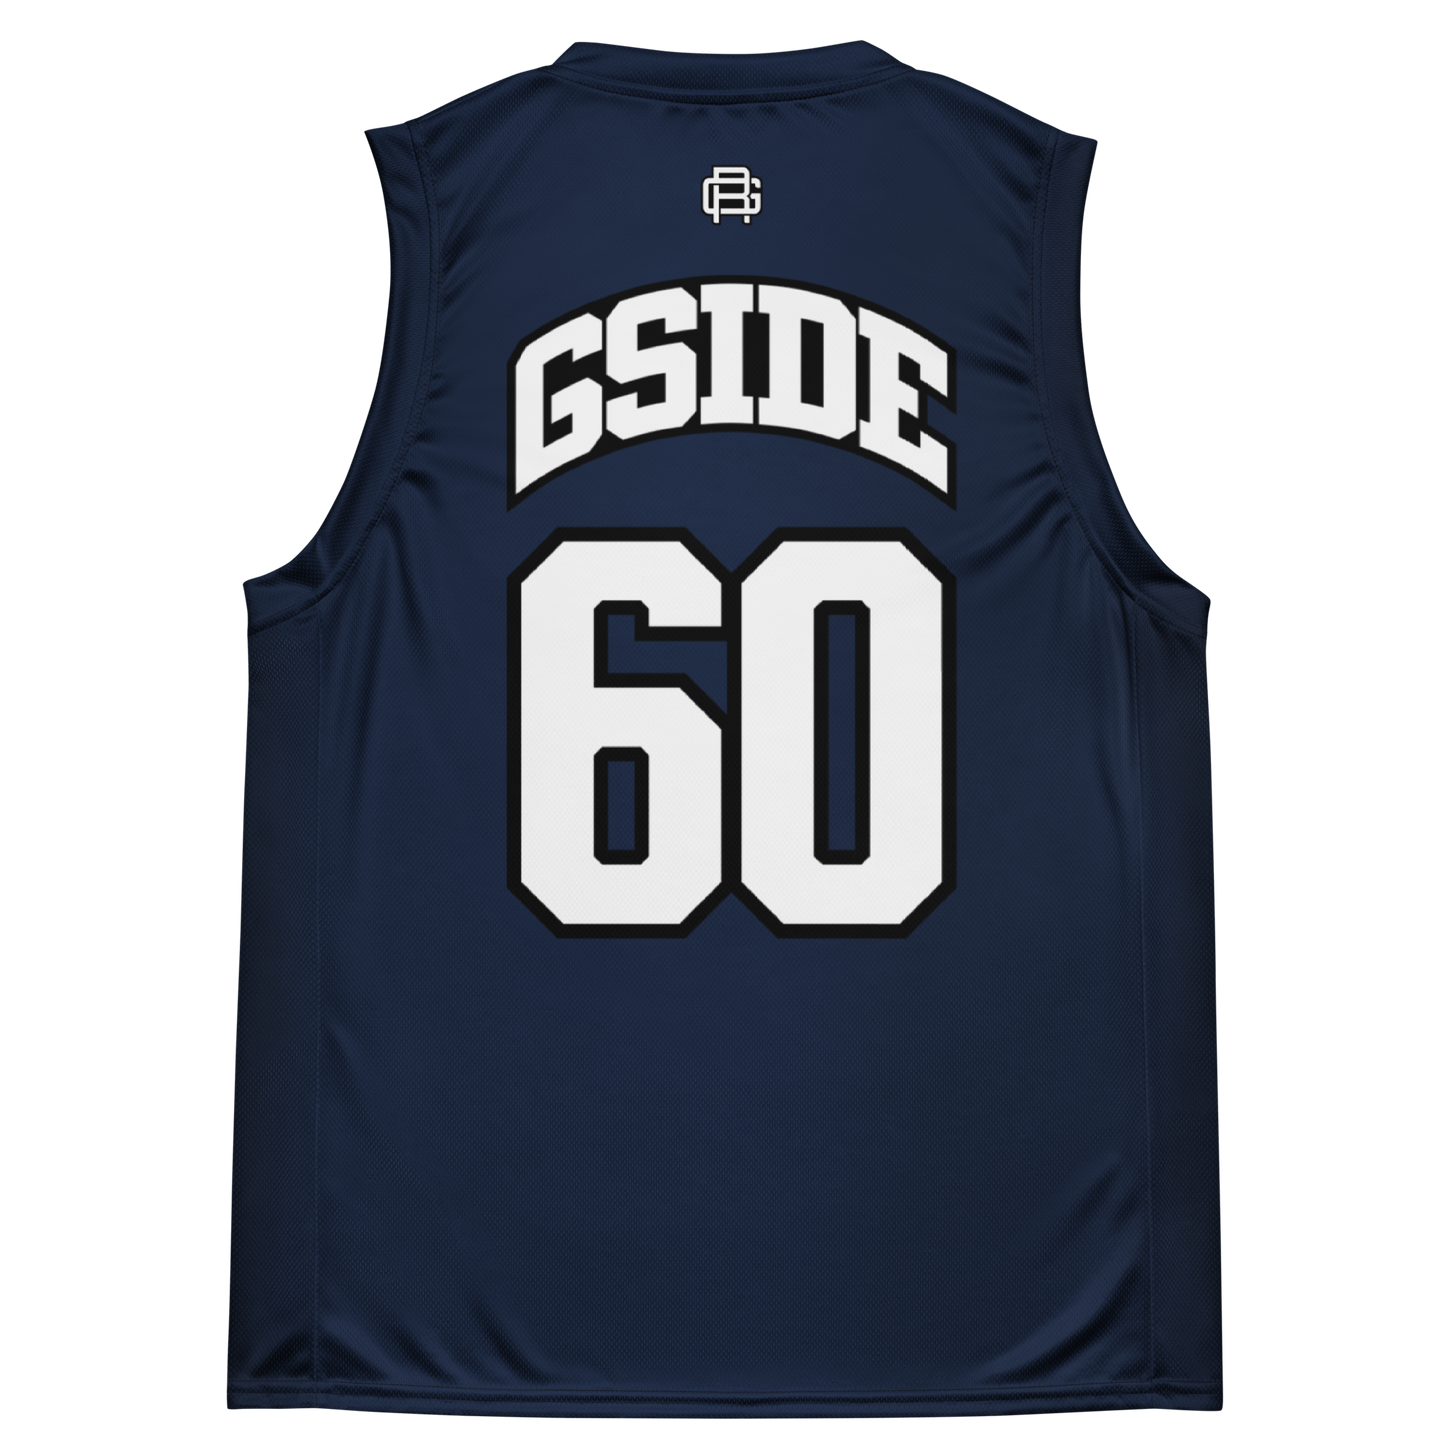 Gside Basketball Jersey - Navy Blue